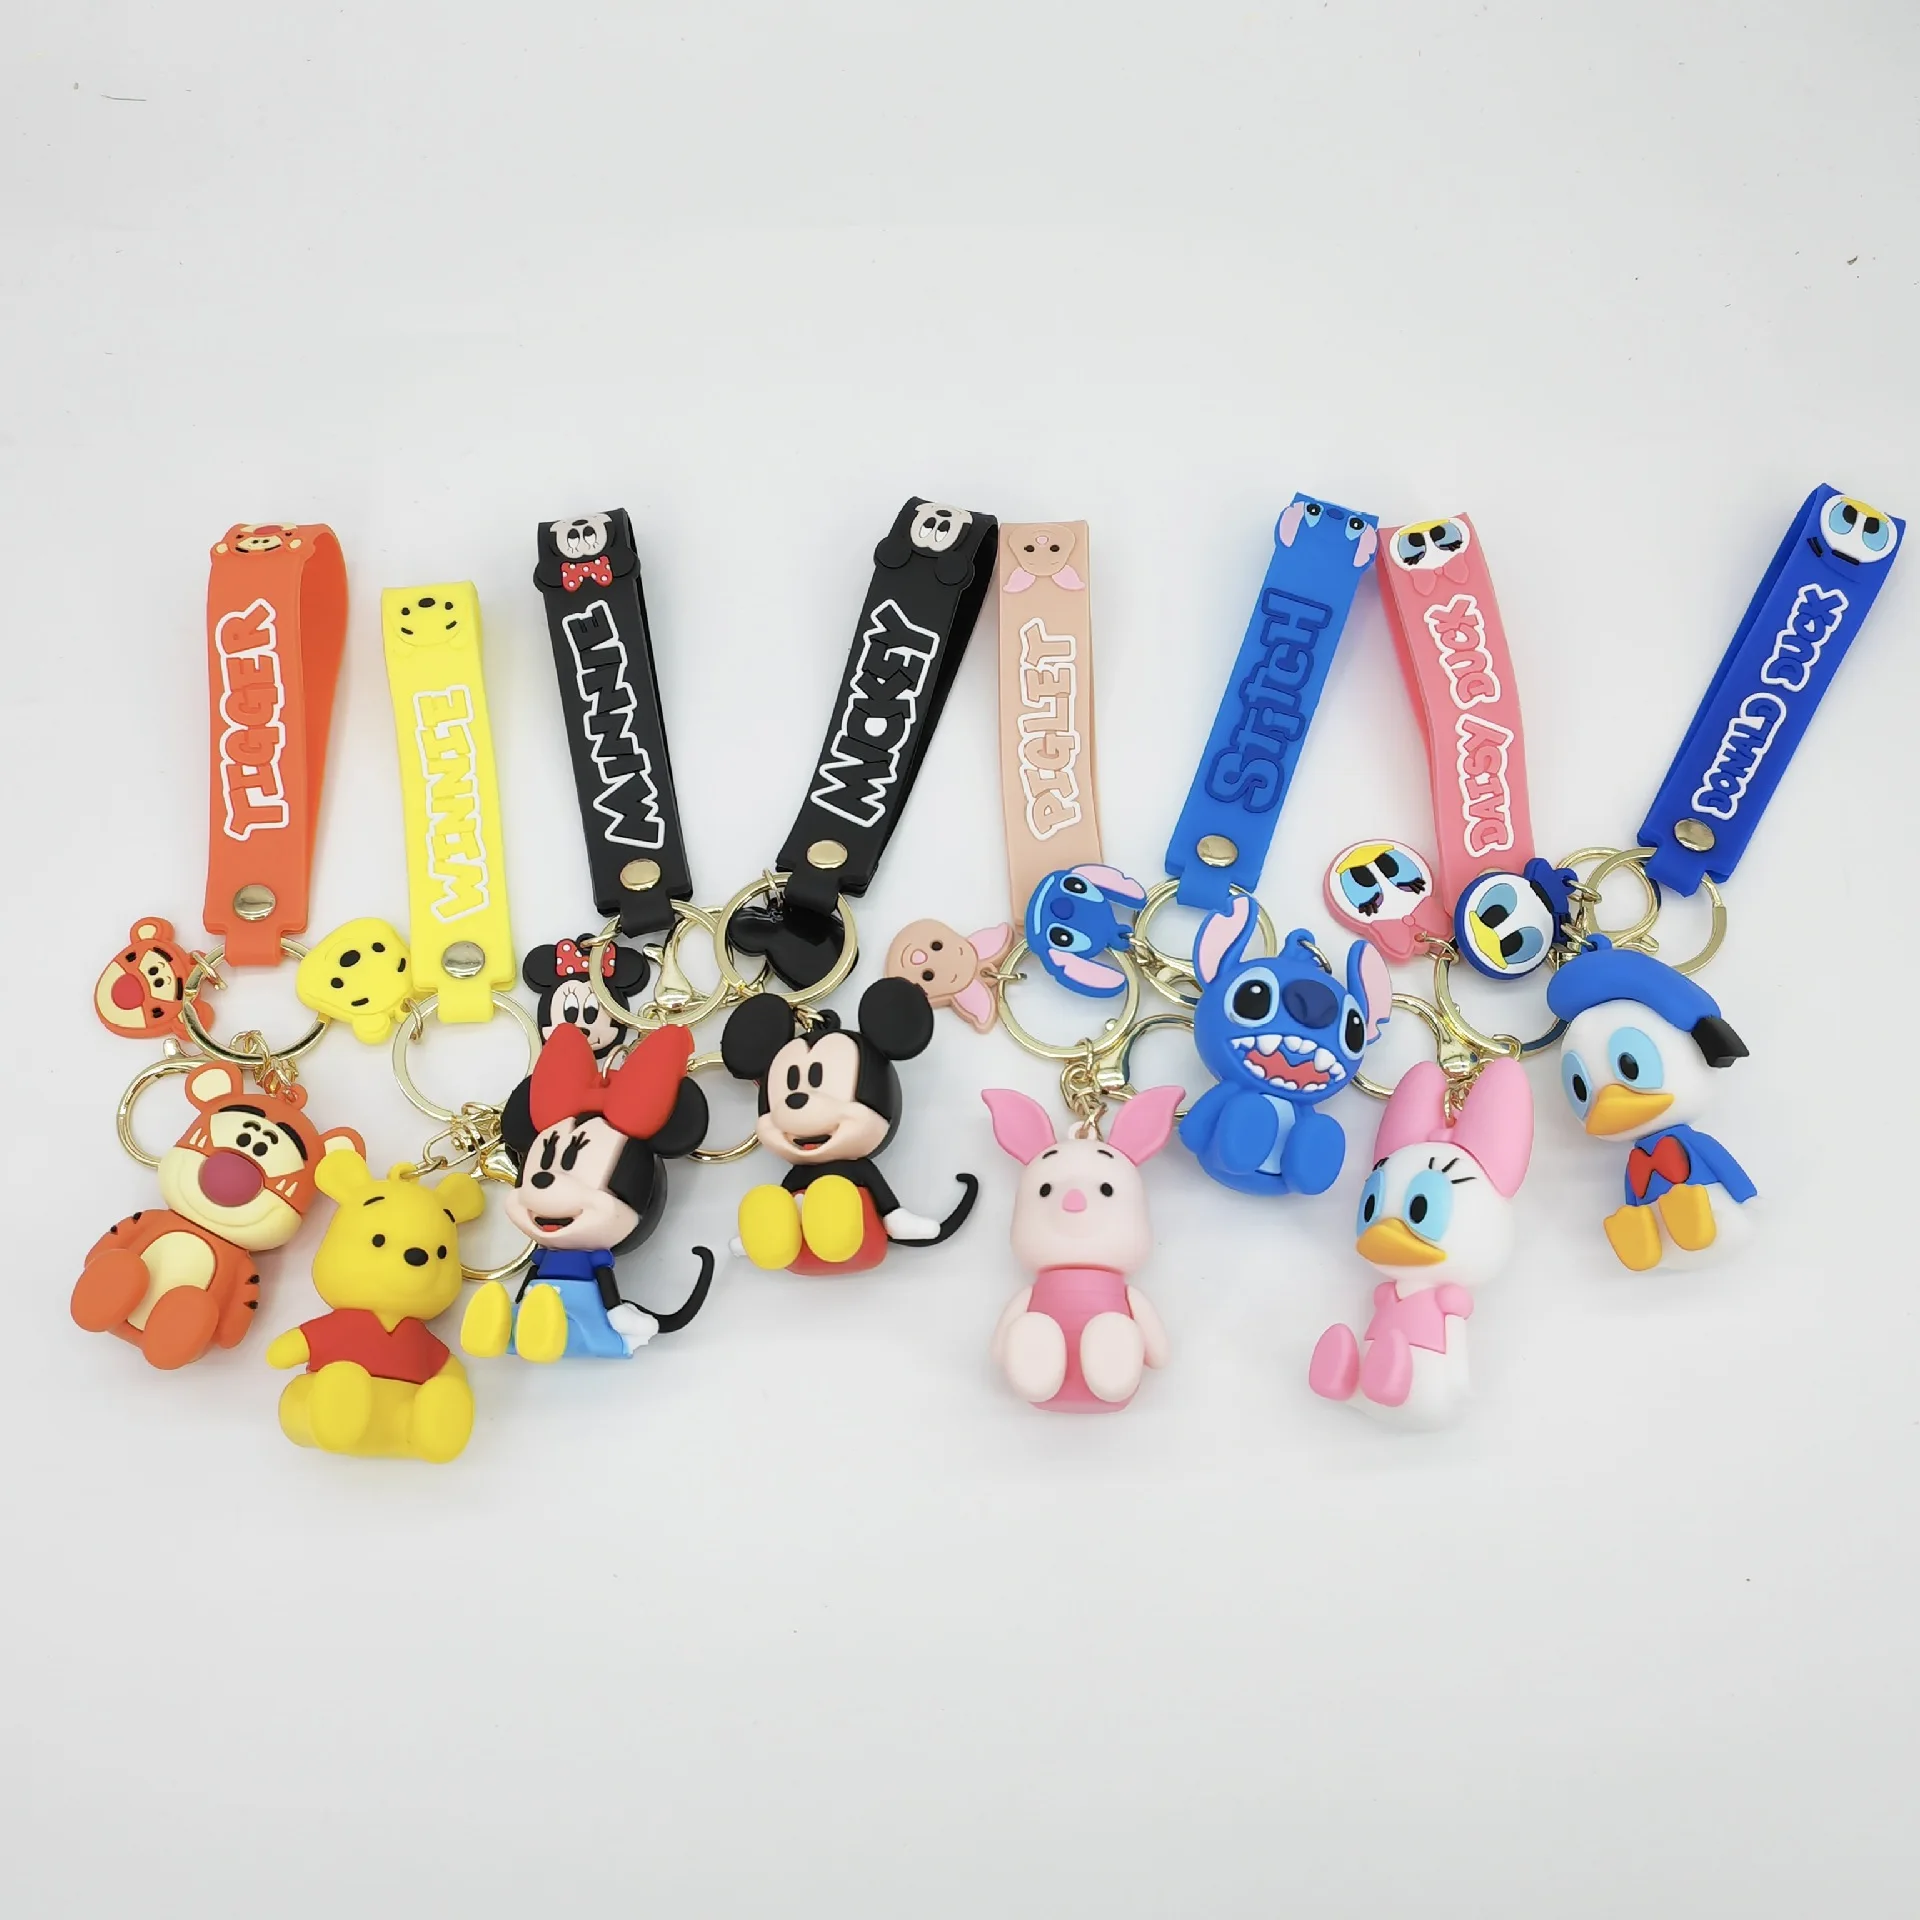 

8 PCS Disney Keychain Cartoon Cute Mickey Minnie Pooh Stitch Figure Keyrings Fashion Ornament Bag Pendant Gifts for Kids Friends